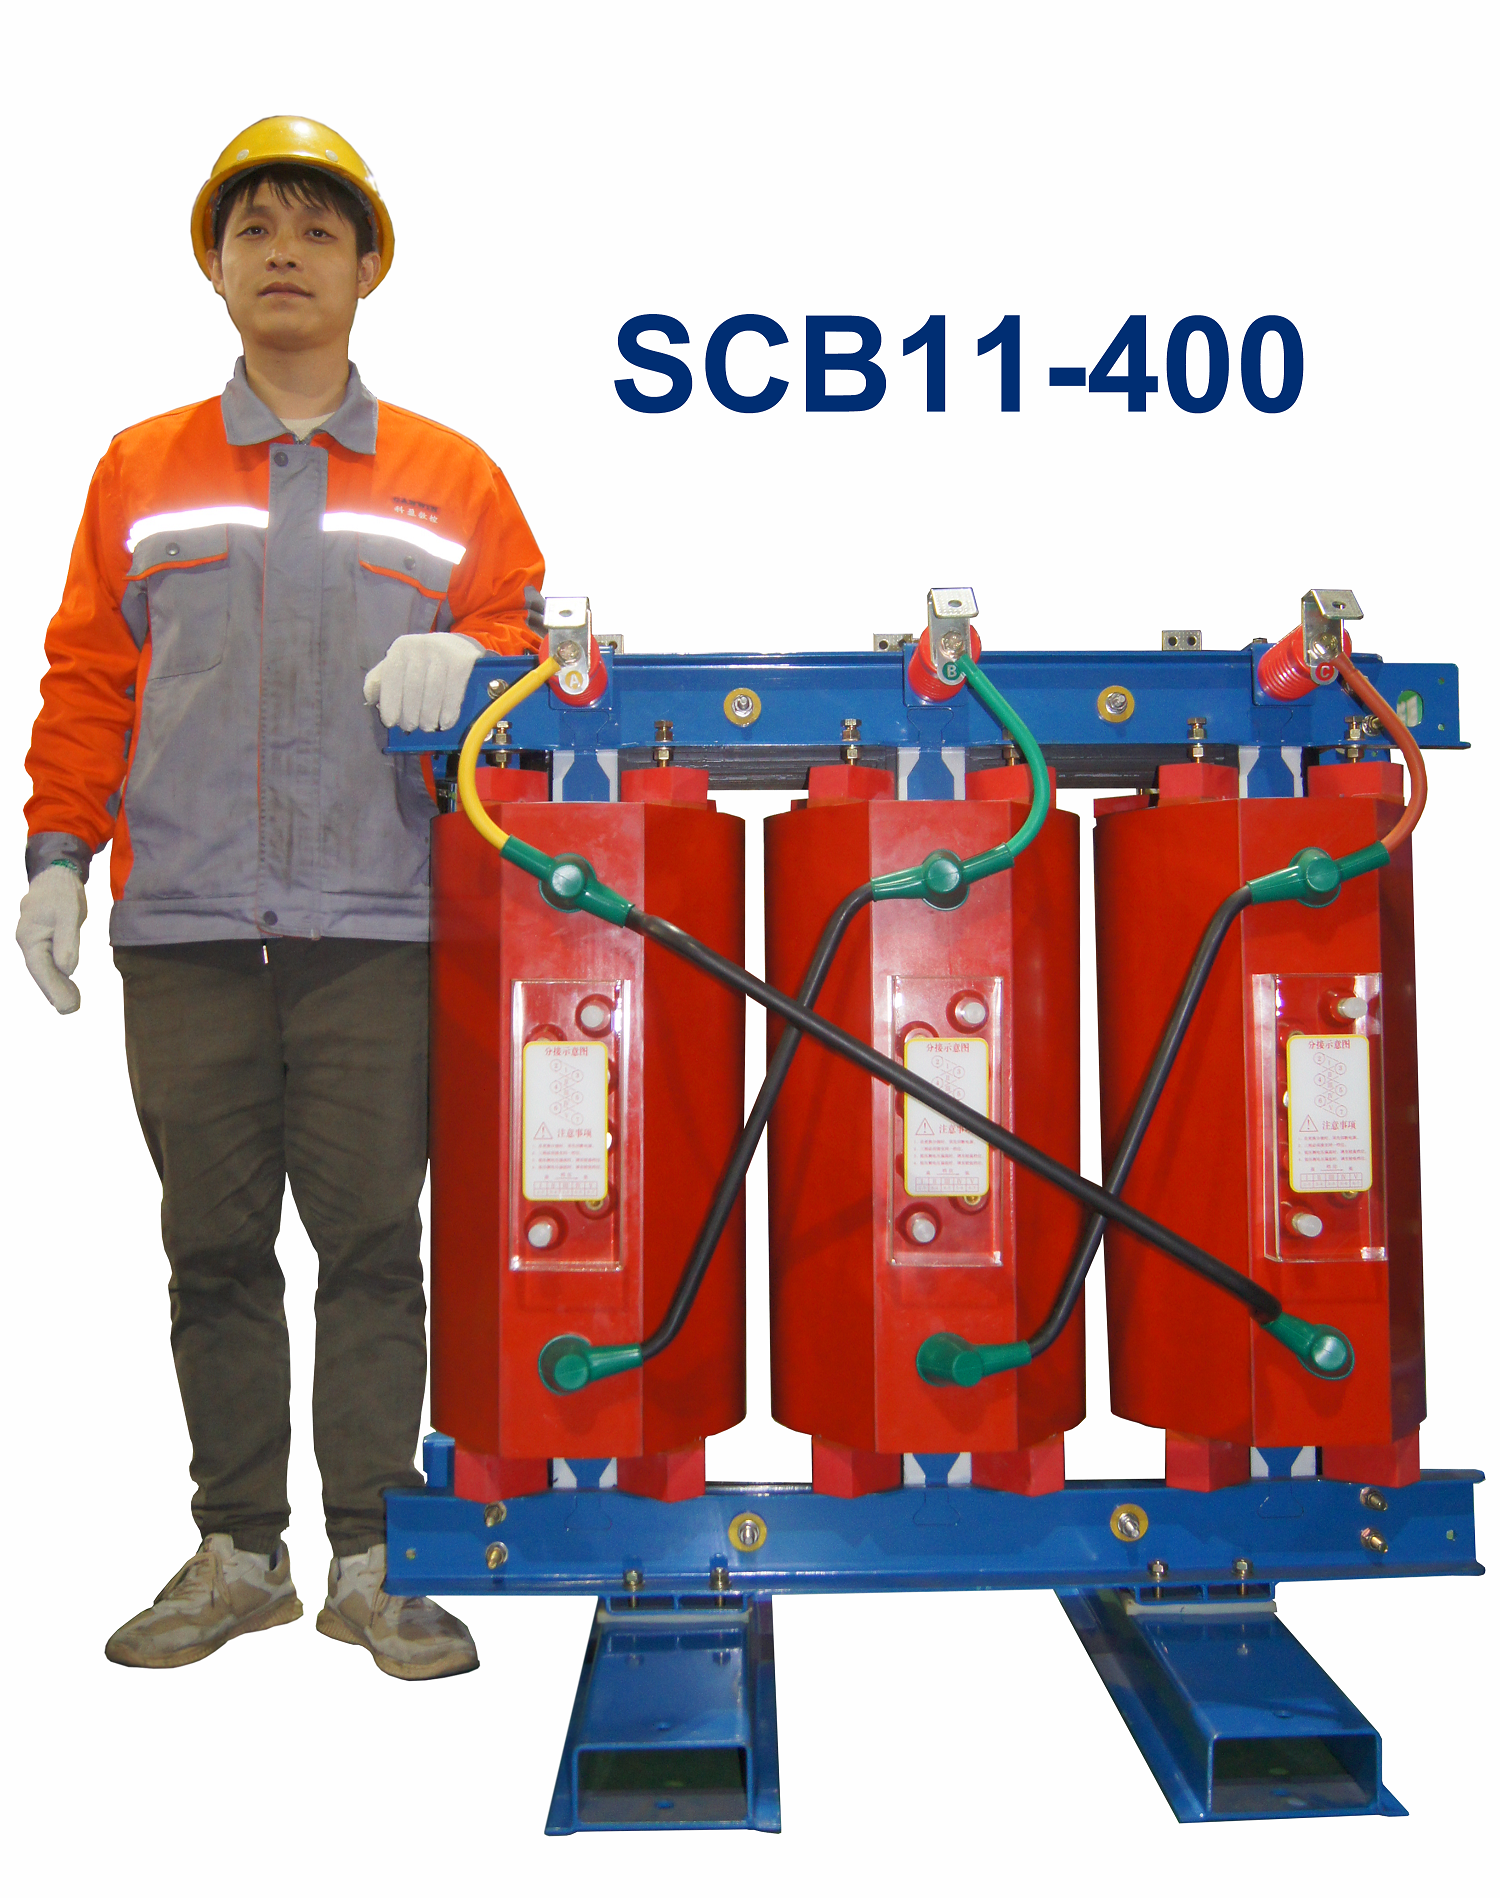 SCB11-400